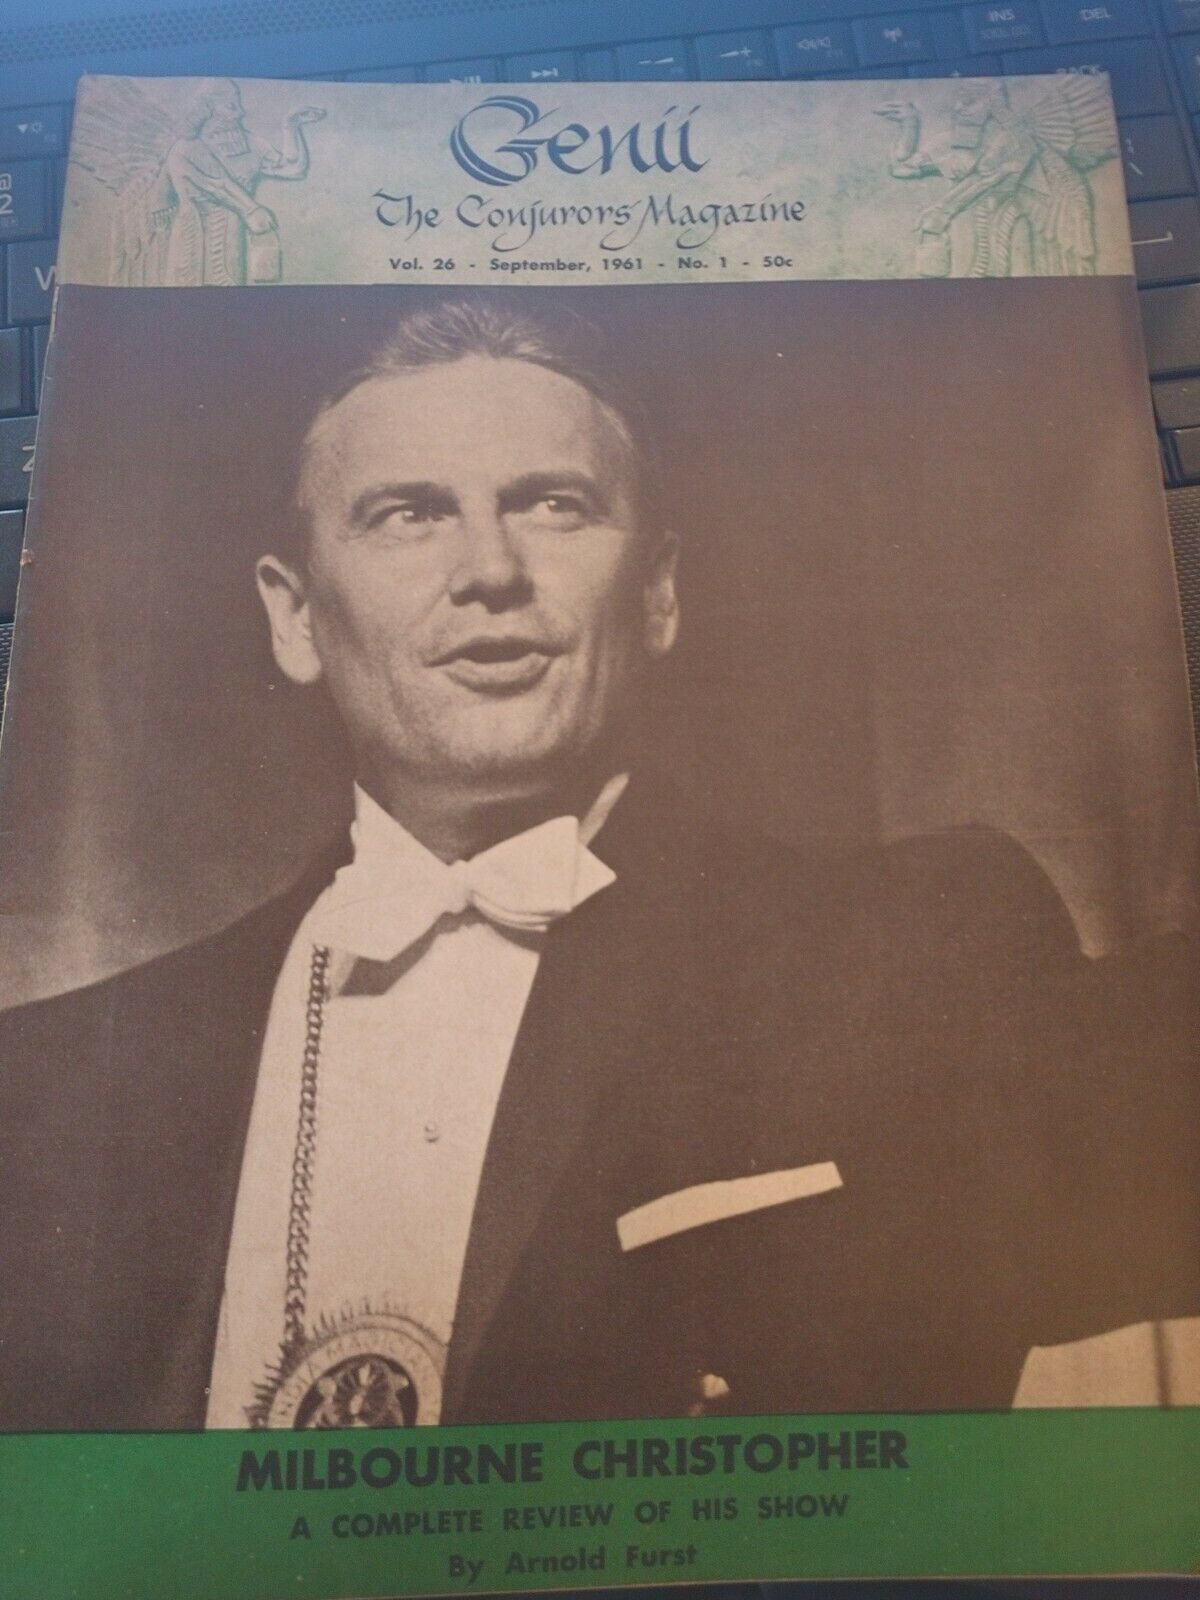 Vintage Melbourne Christopher Genii Magazine 1961 Vol 26 No 1